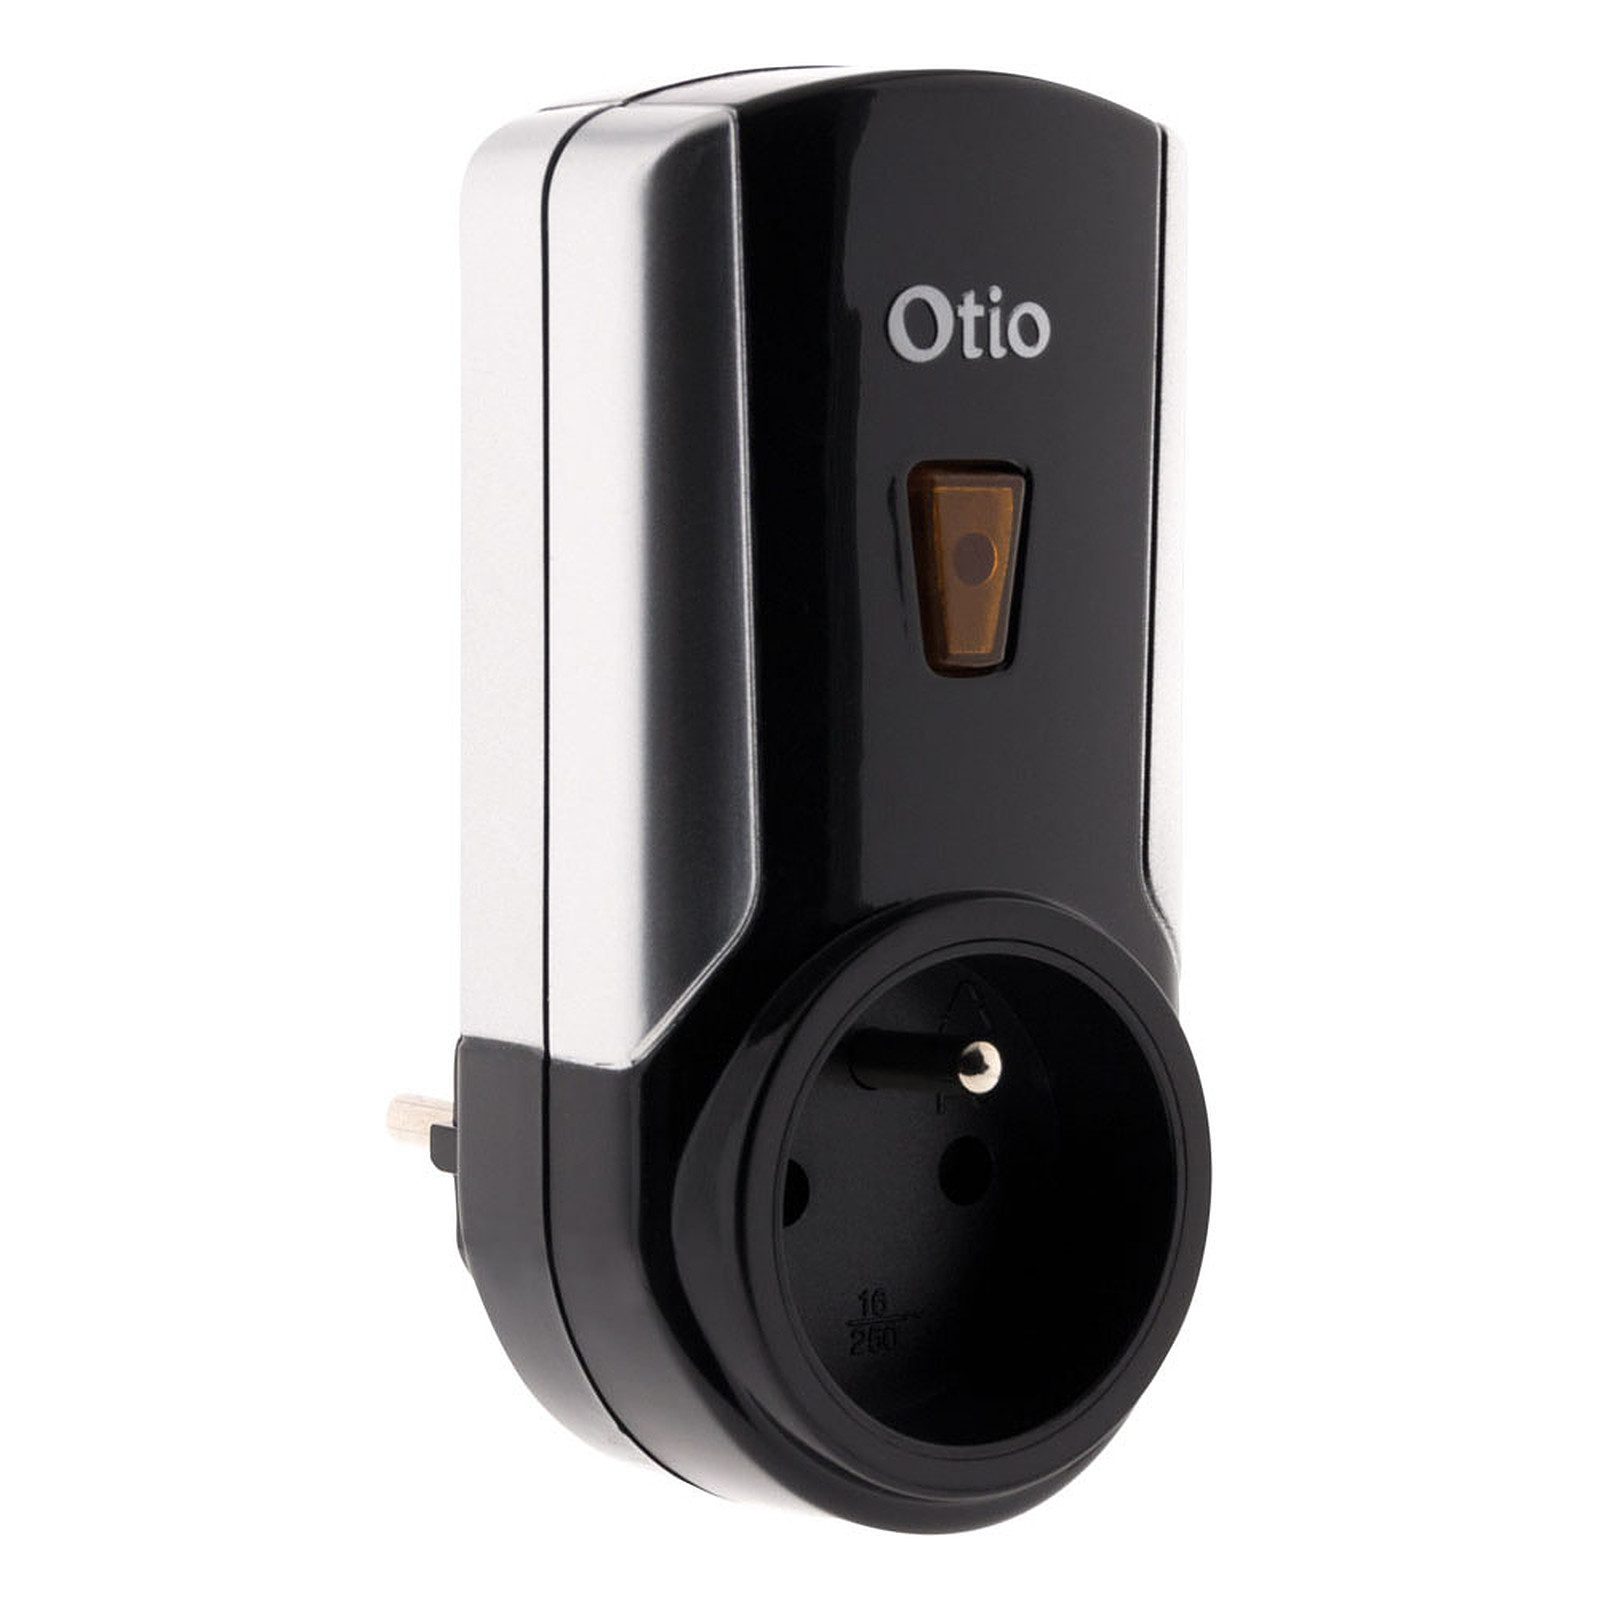 Otio-Prise telecommandee PT-8010 - Chauffage - Prise connectee Otio